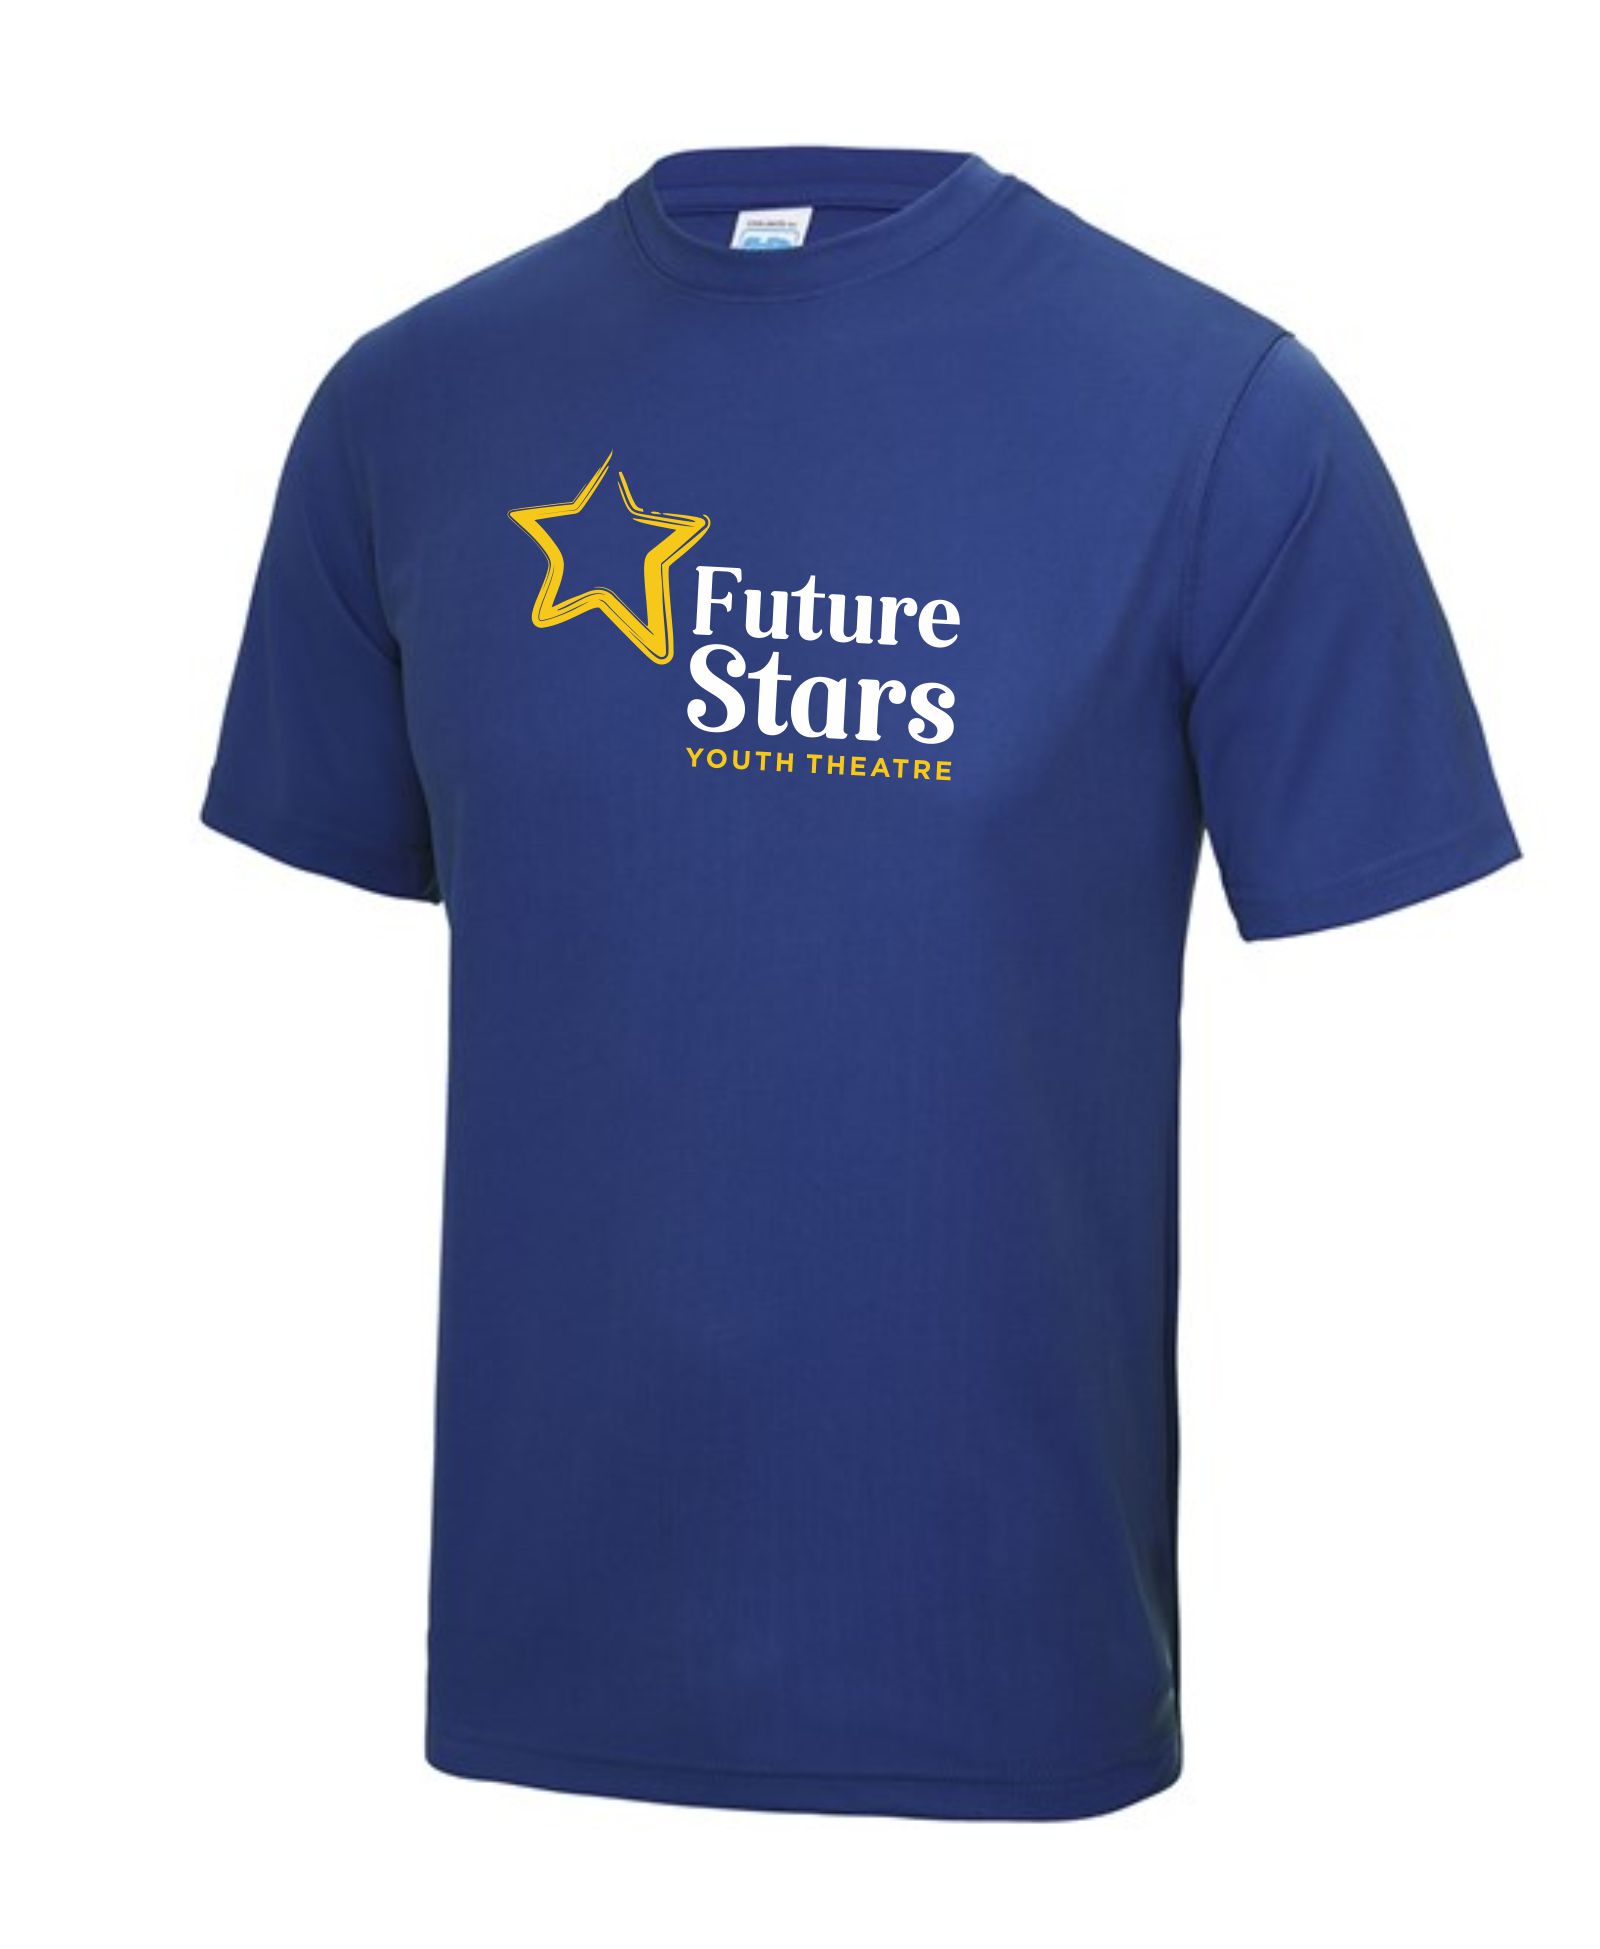 Future Stars Youth Theatre – Dri Fit Colour T Shirt (Adults)